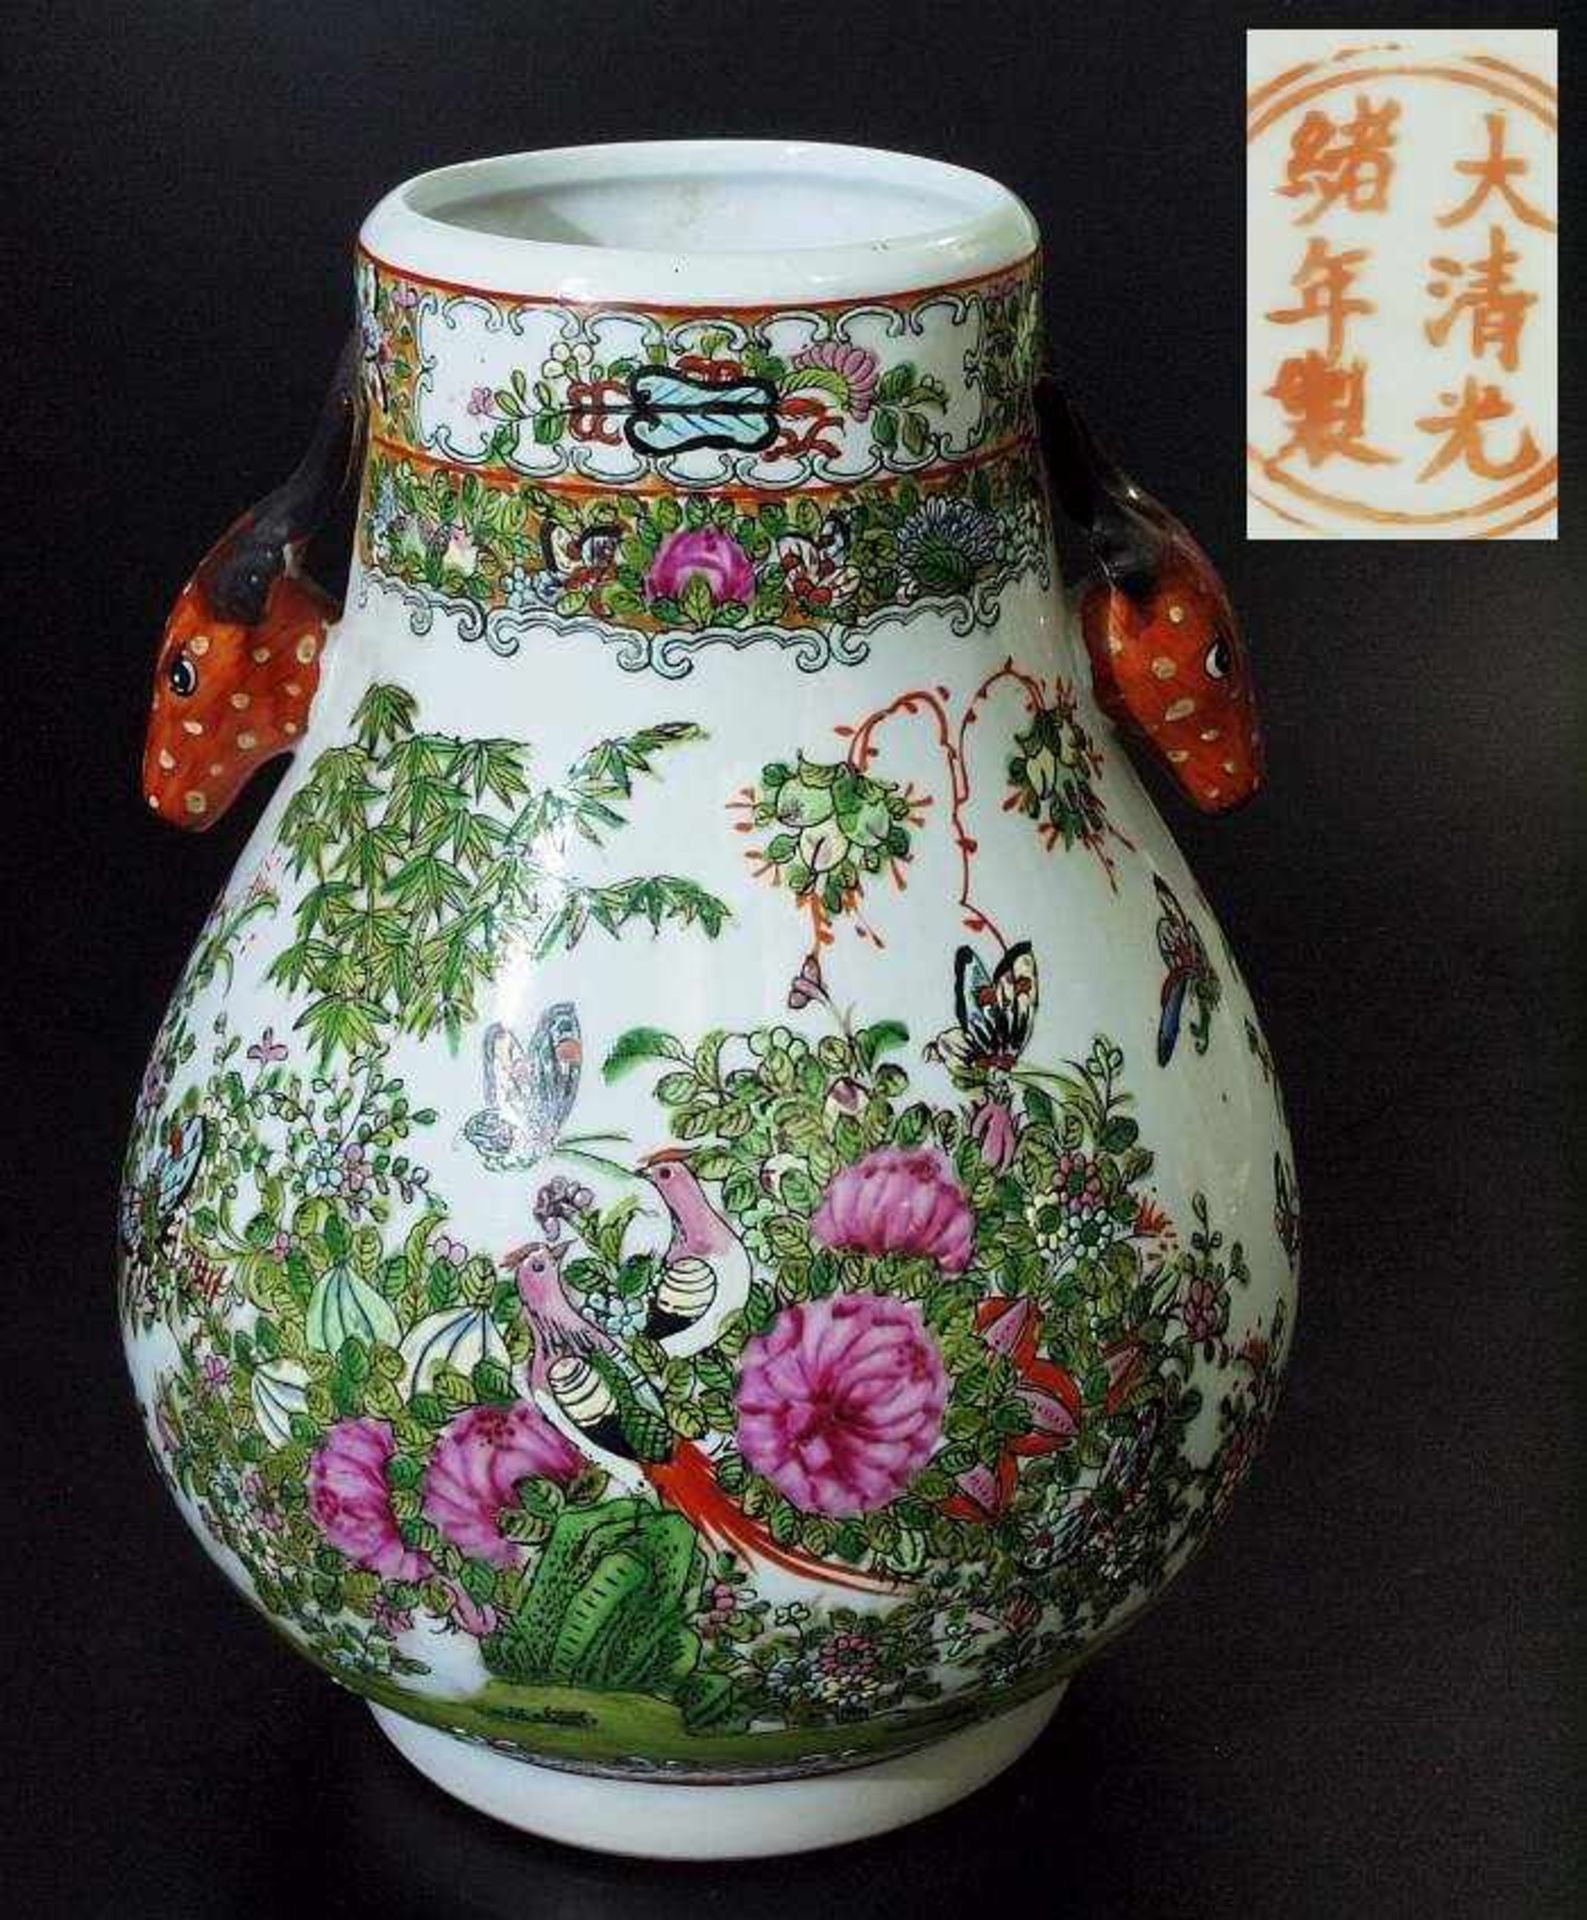 Vase mit Antilopenköpfen. Vase mit Antilopenköpfen. Anfang 20. Jahrhundert. Porzellan, bemalt in den